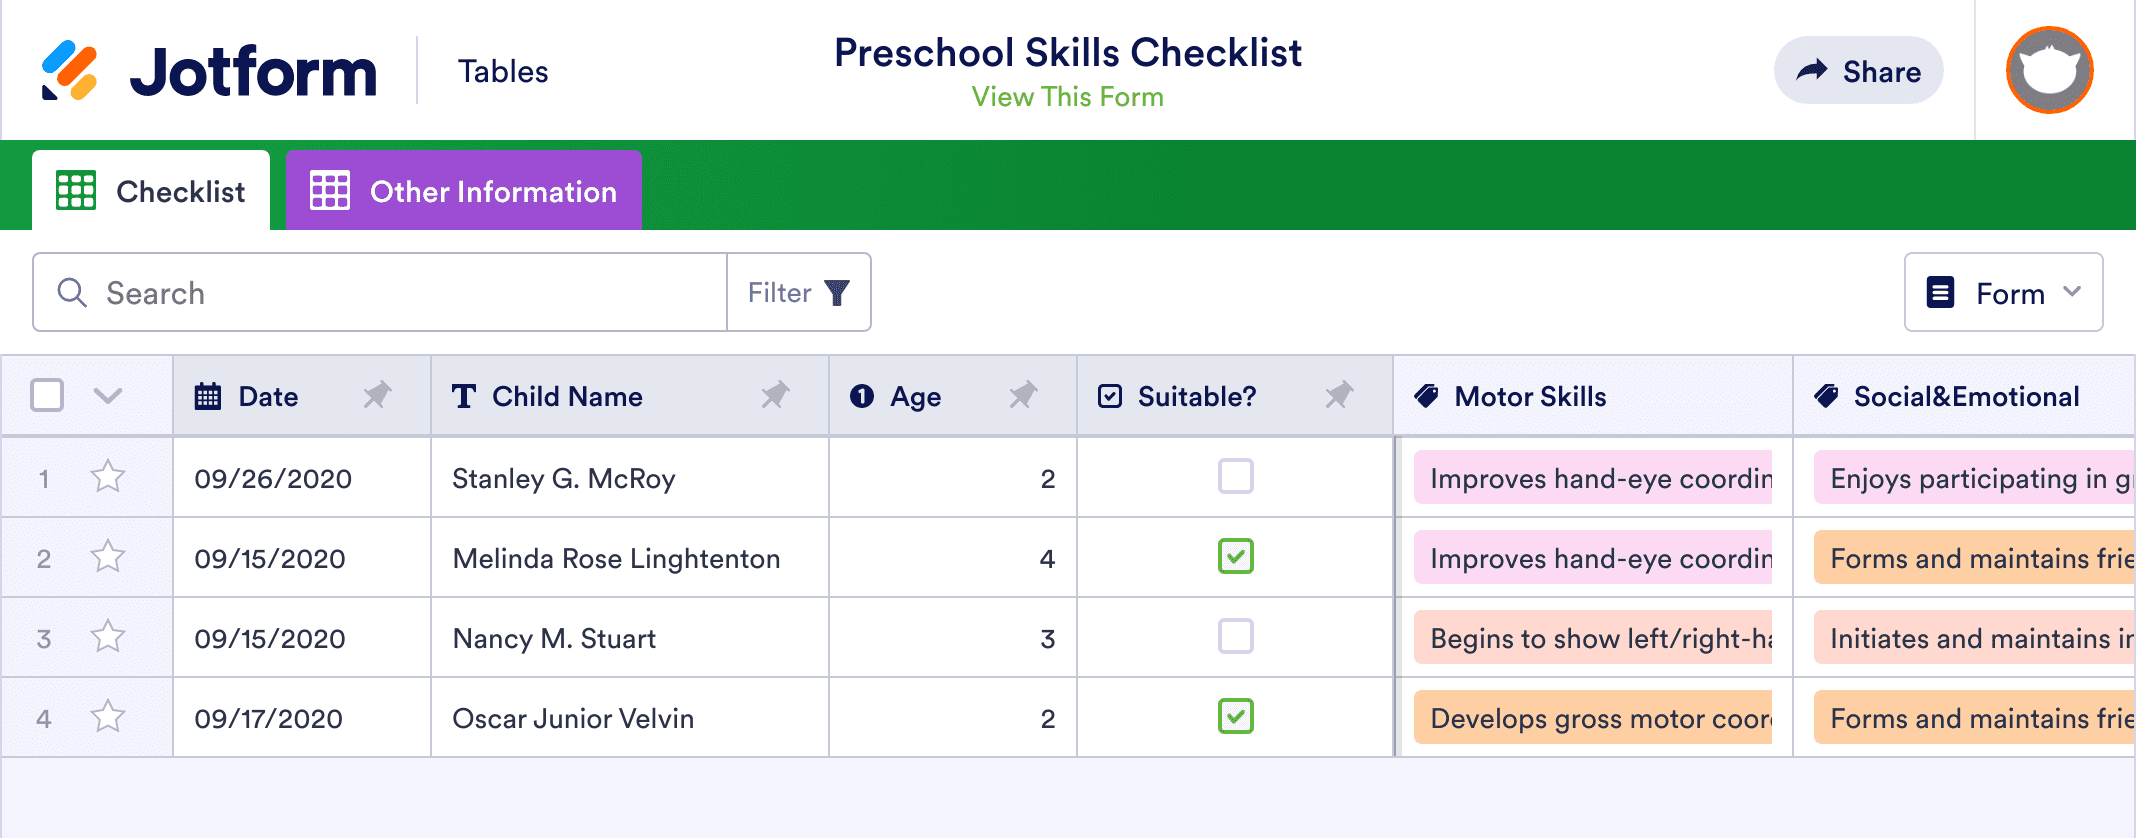 Preschool Skills Checklist